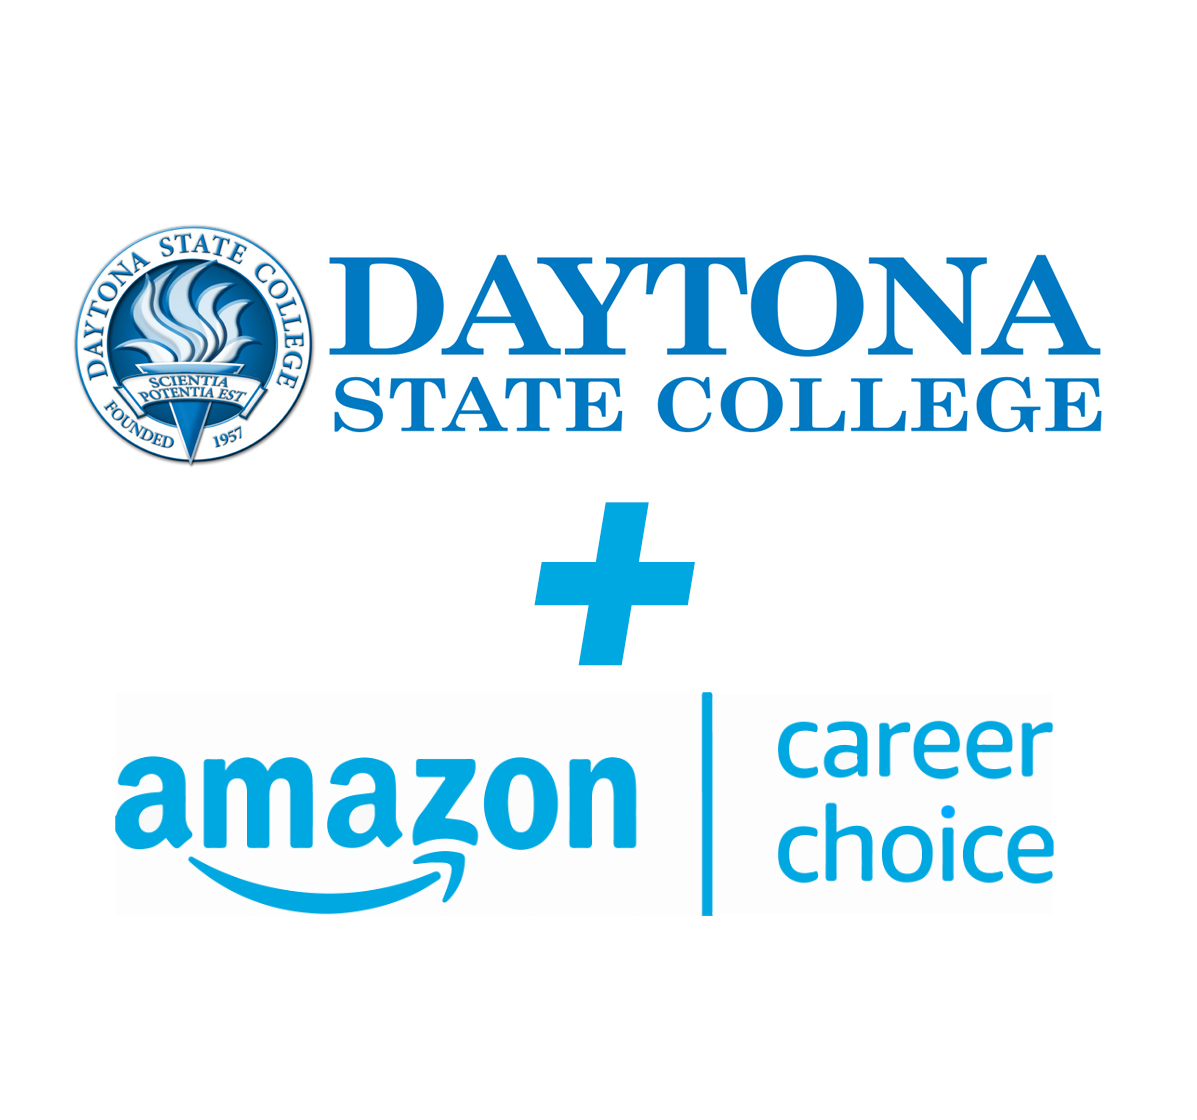 Amazon Career Choice and Daytona State College logos